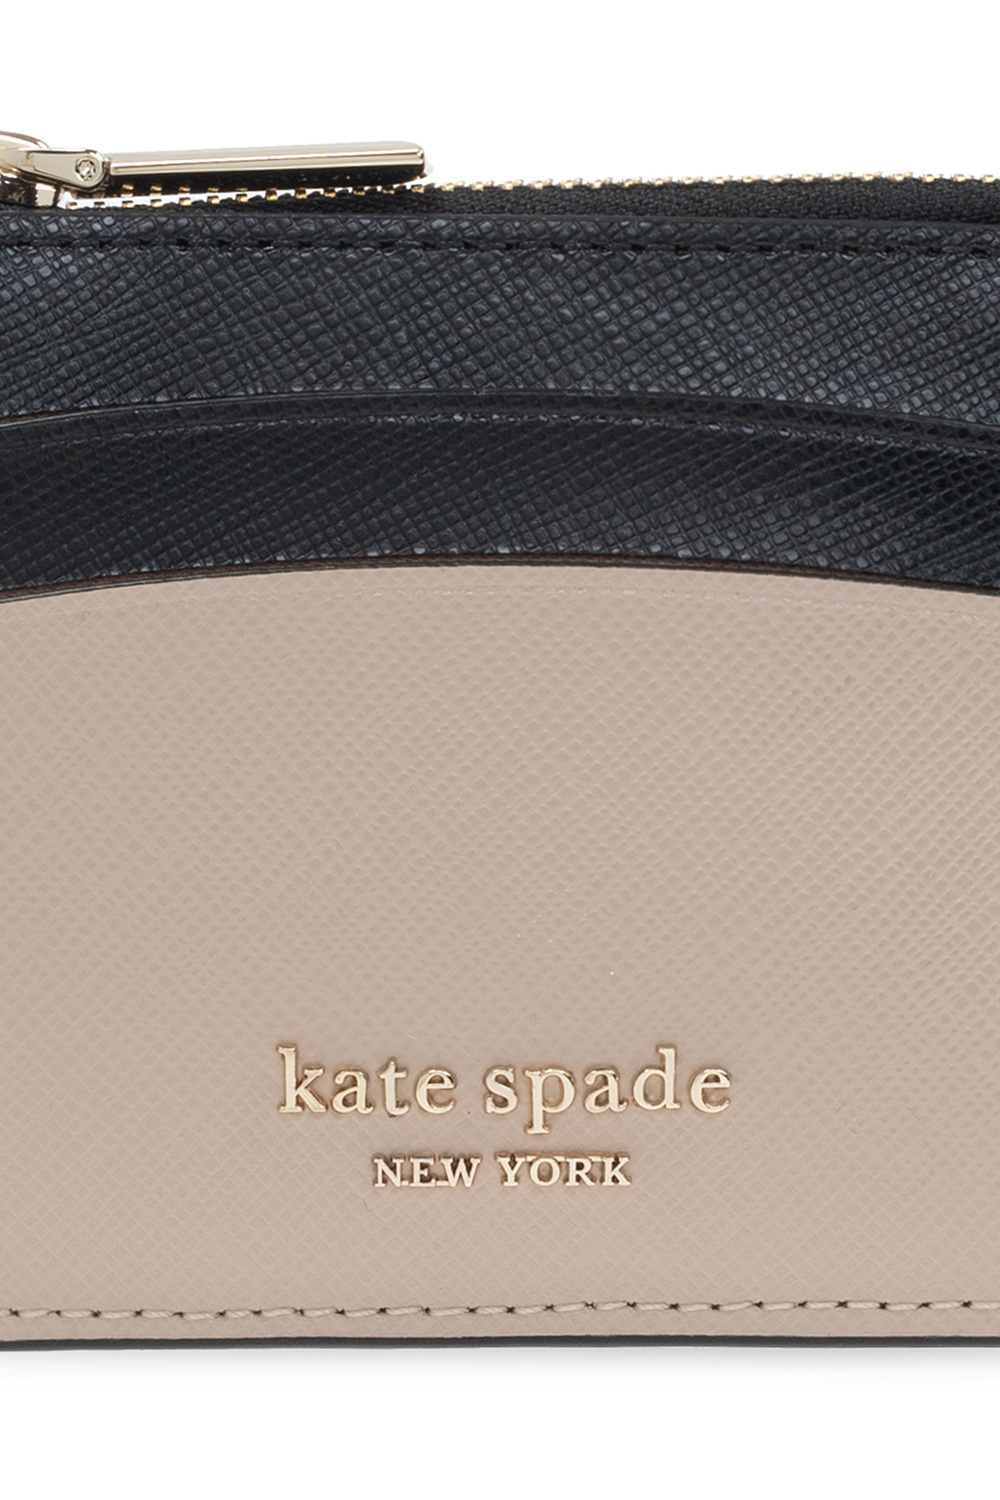 Kate Spade Card holder